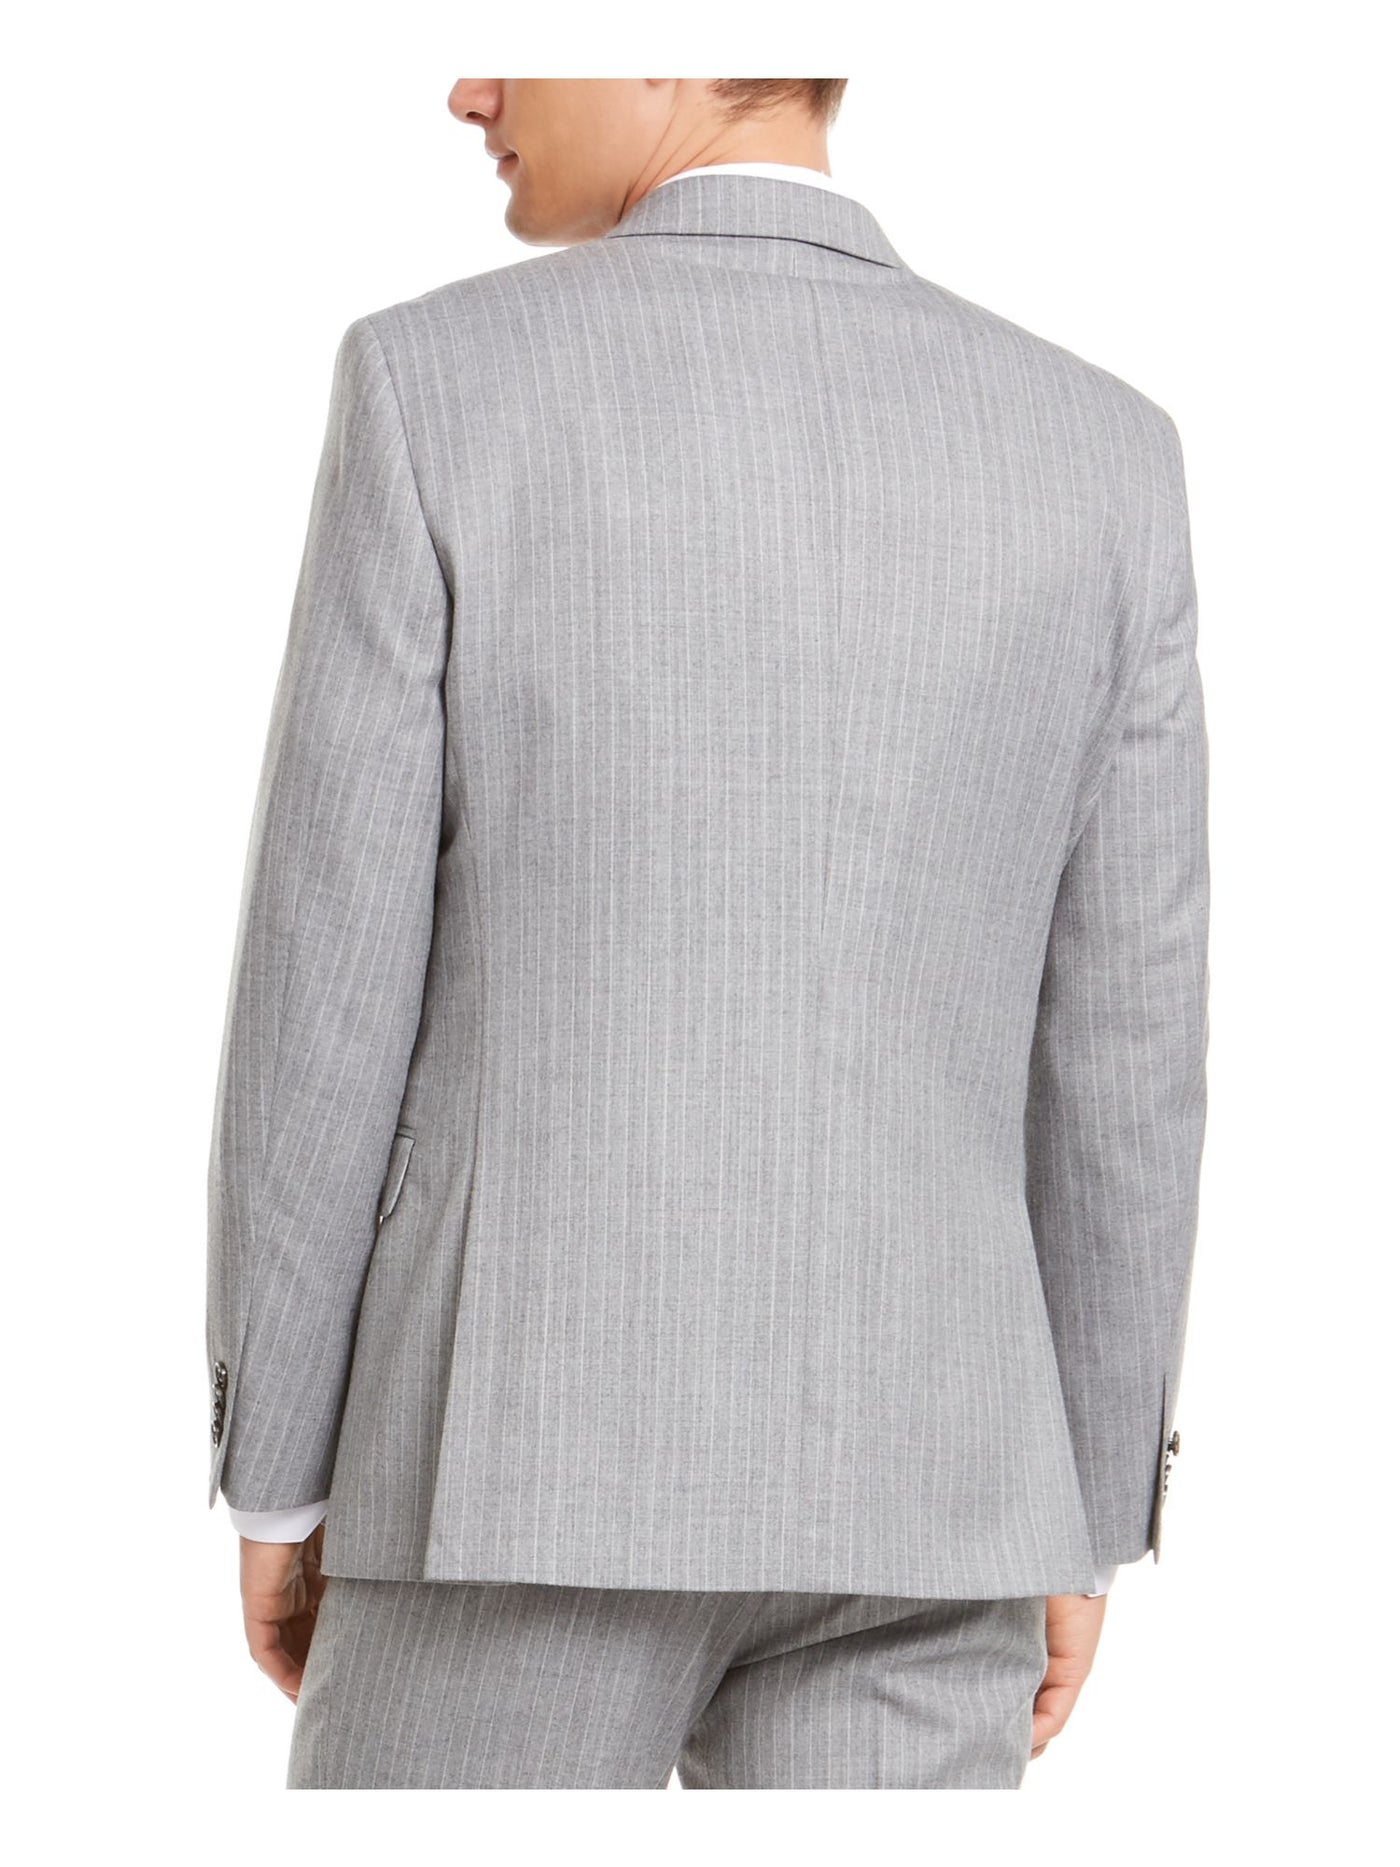 TOMMY HILFIGER Mens Gray Single Breasted Pinstripe Wool Blend Blazer Jacket 40R